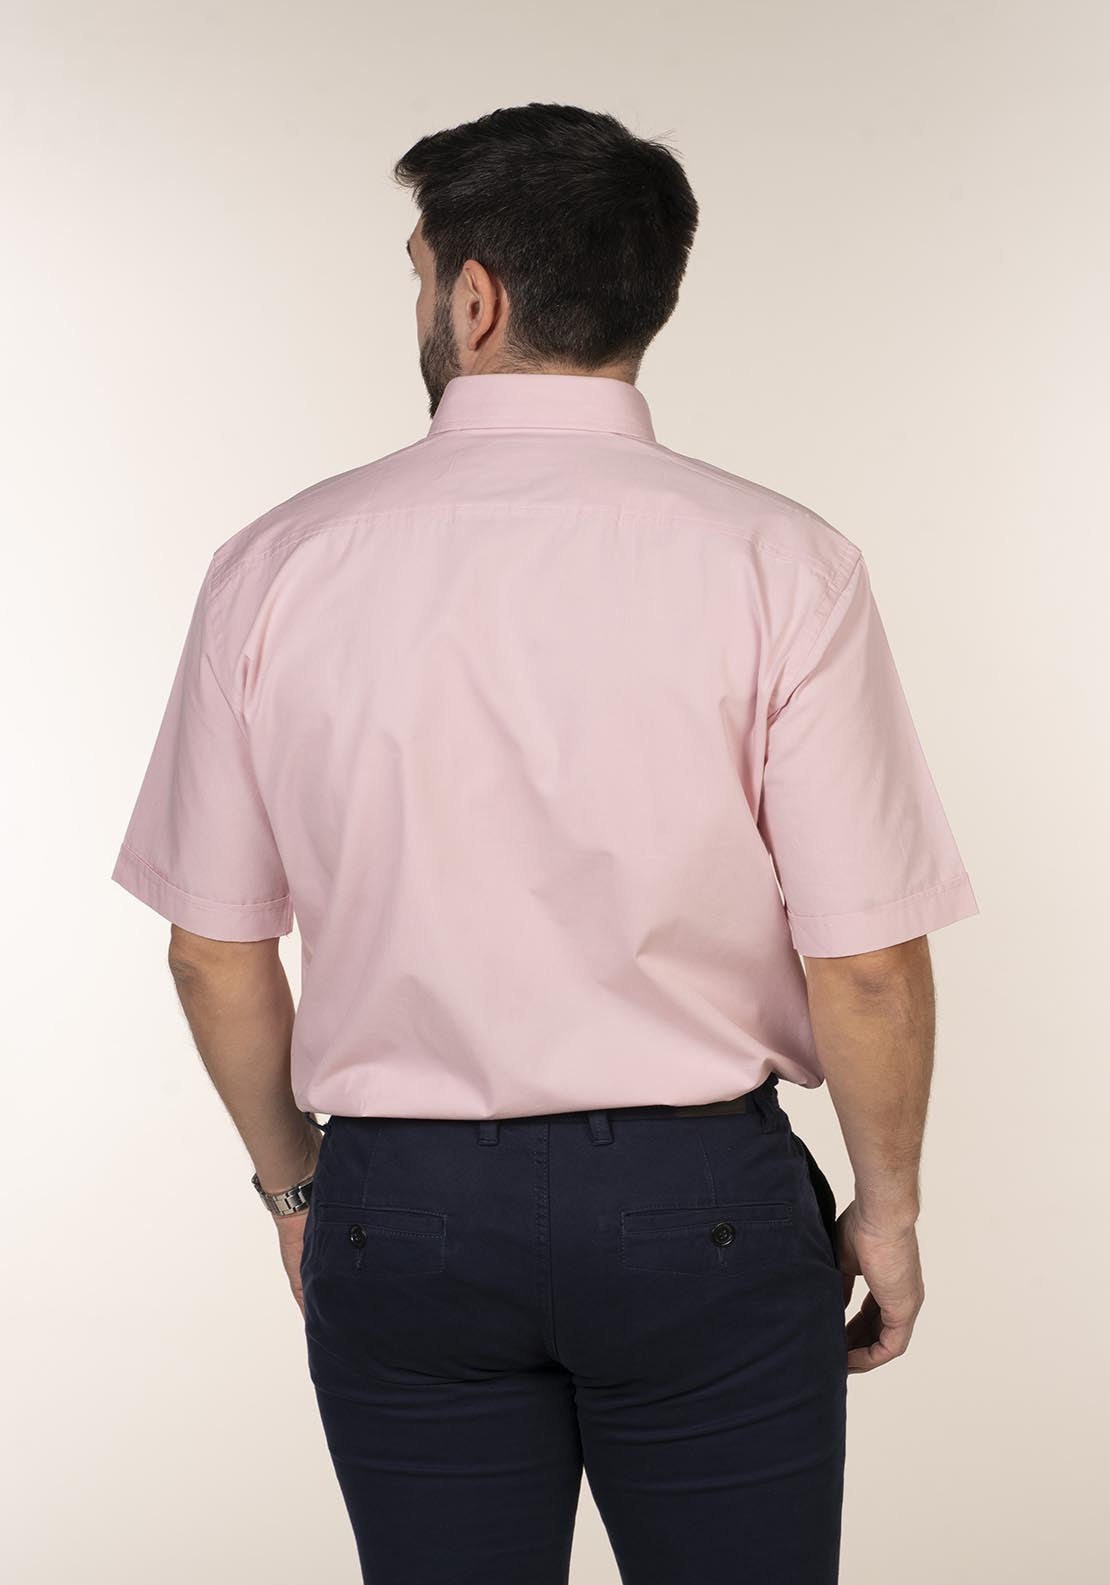 Yeats Casual Plain Short Sleeve Shirt - Pink 3 Shaws Department Stores